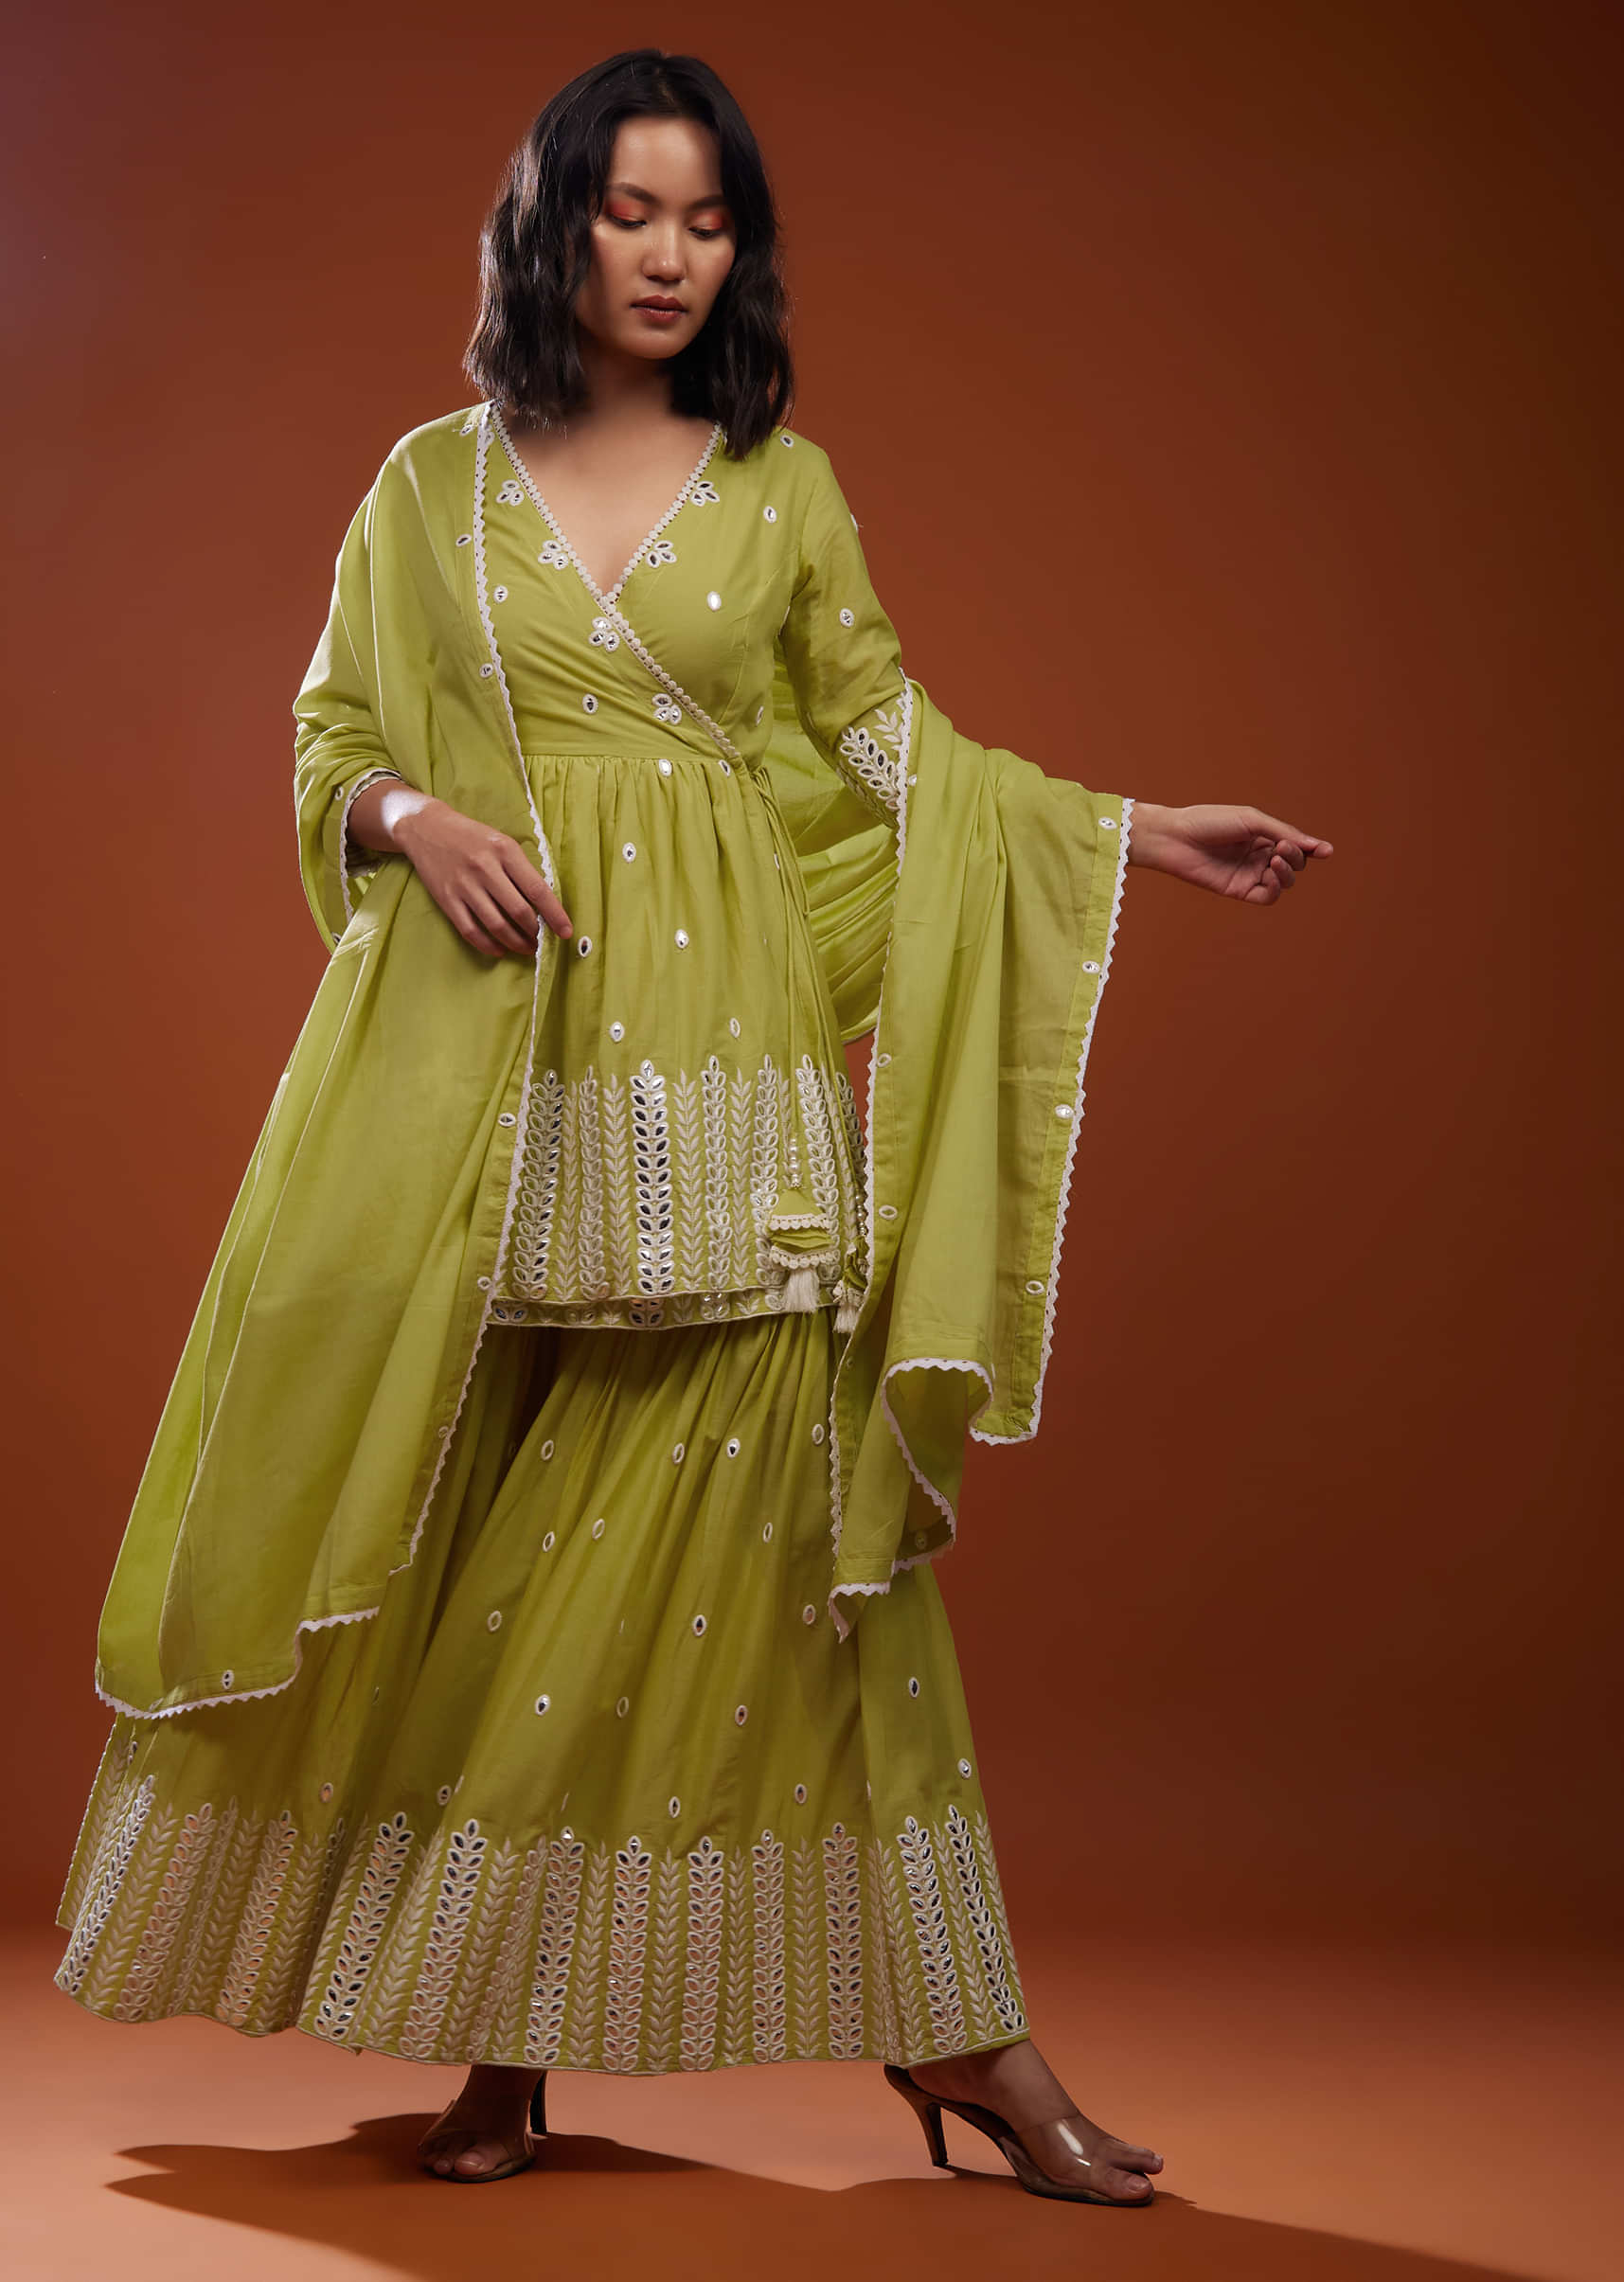 Celery Yellow Sharara Suit Set With Angarakha Top